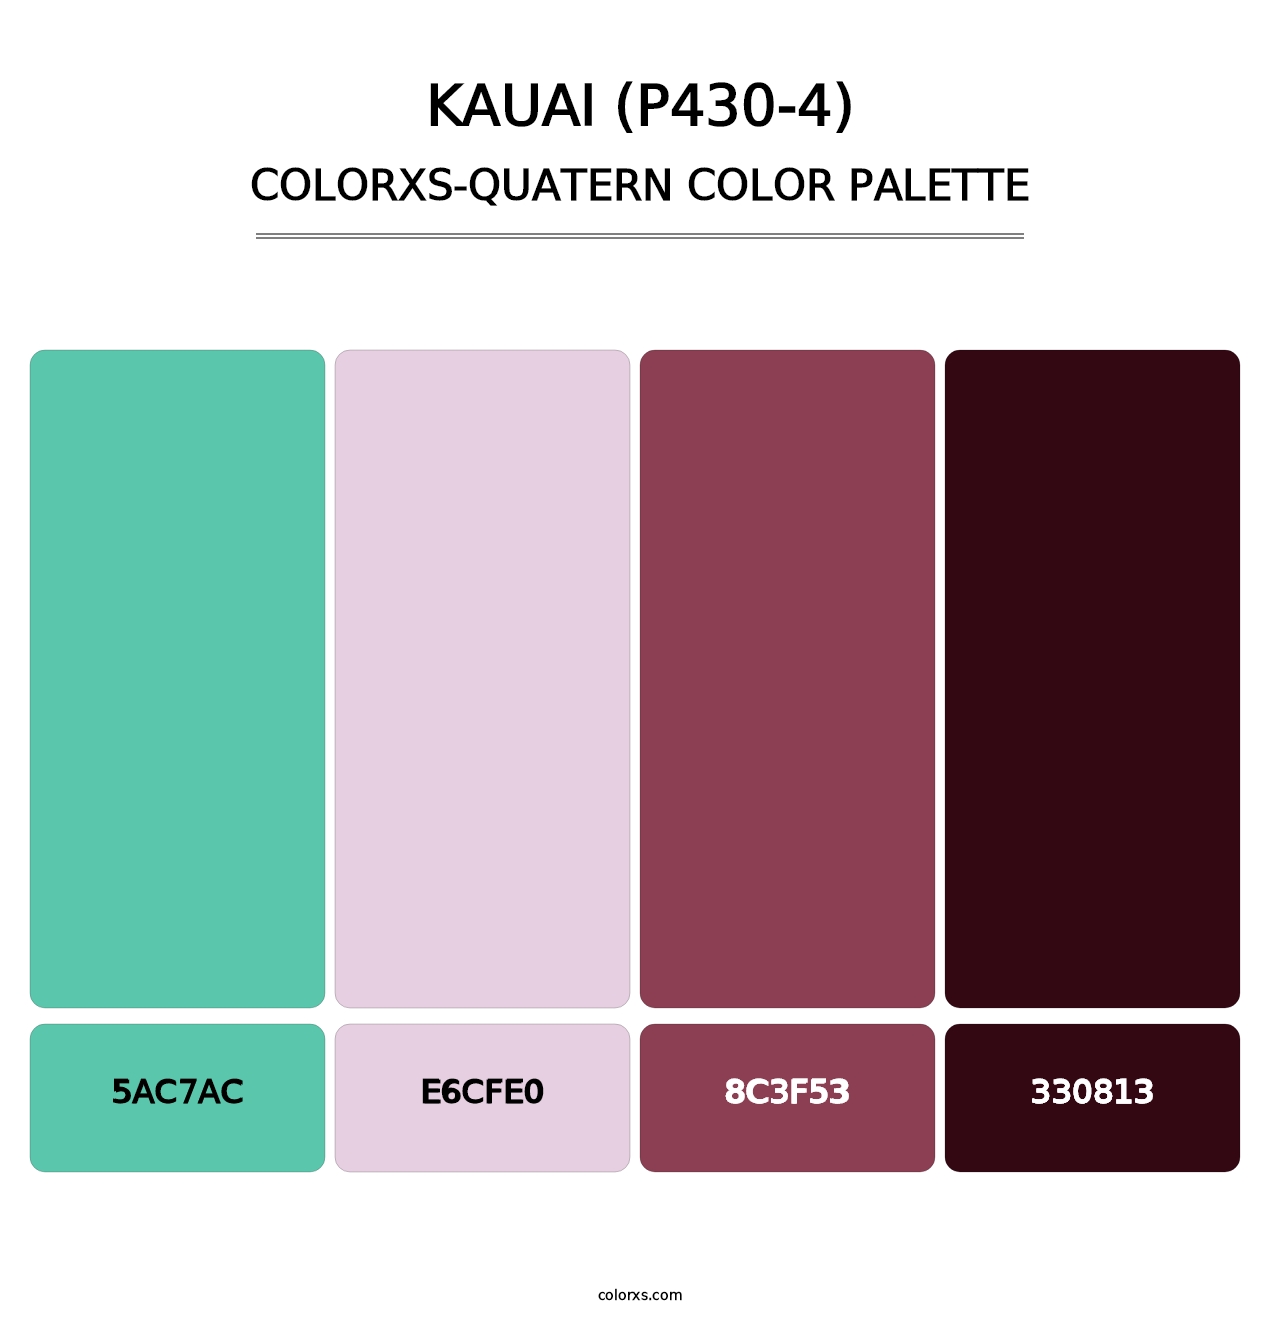 Kauai (P430-4) - Colorxs Quatern Palette